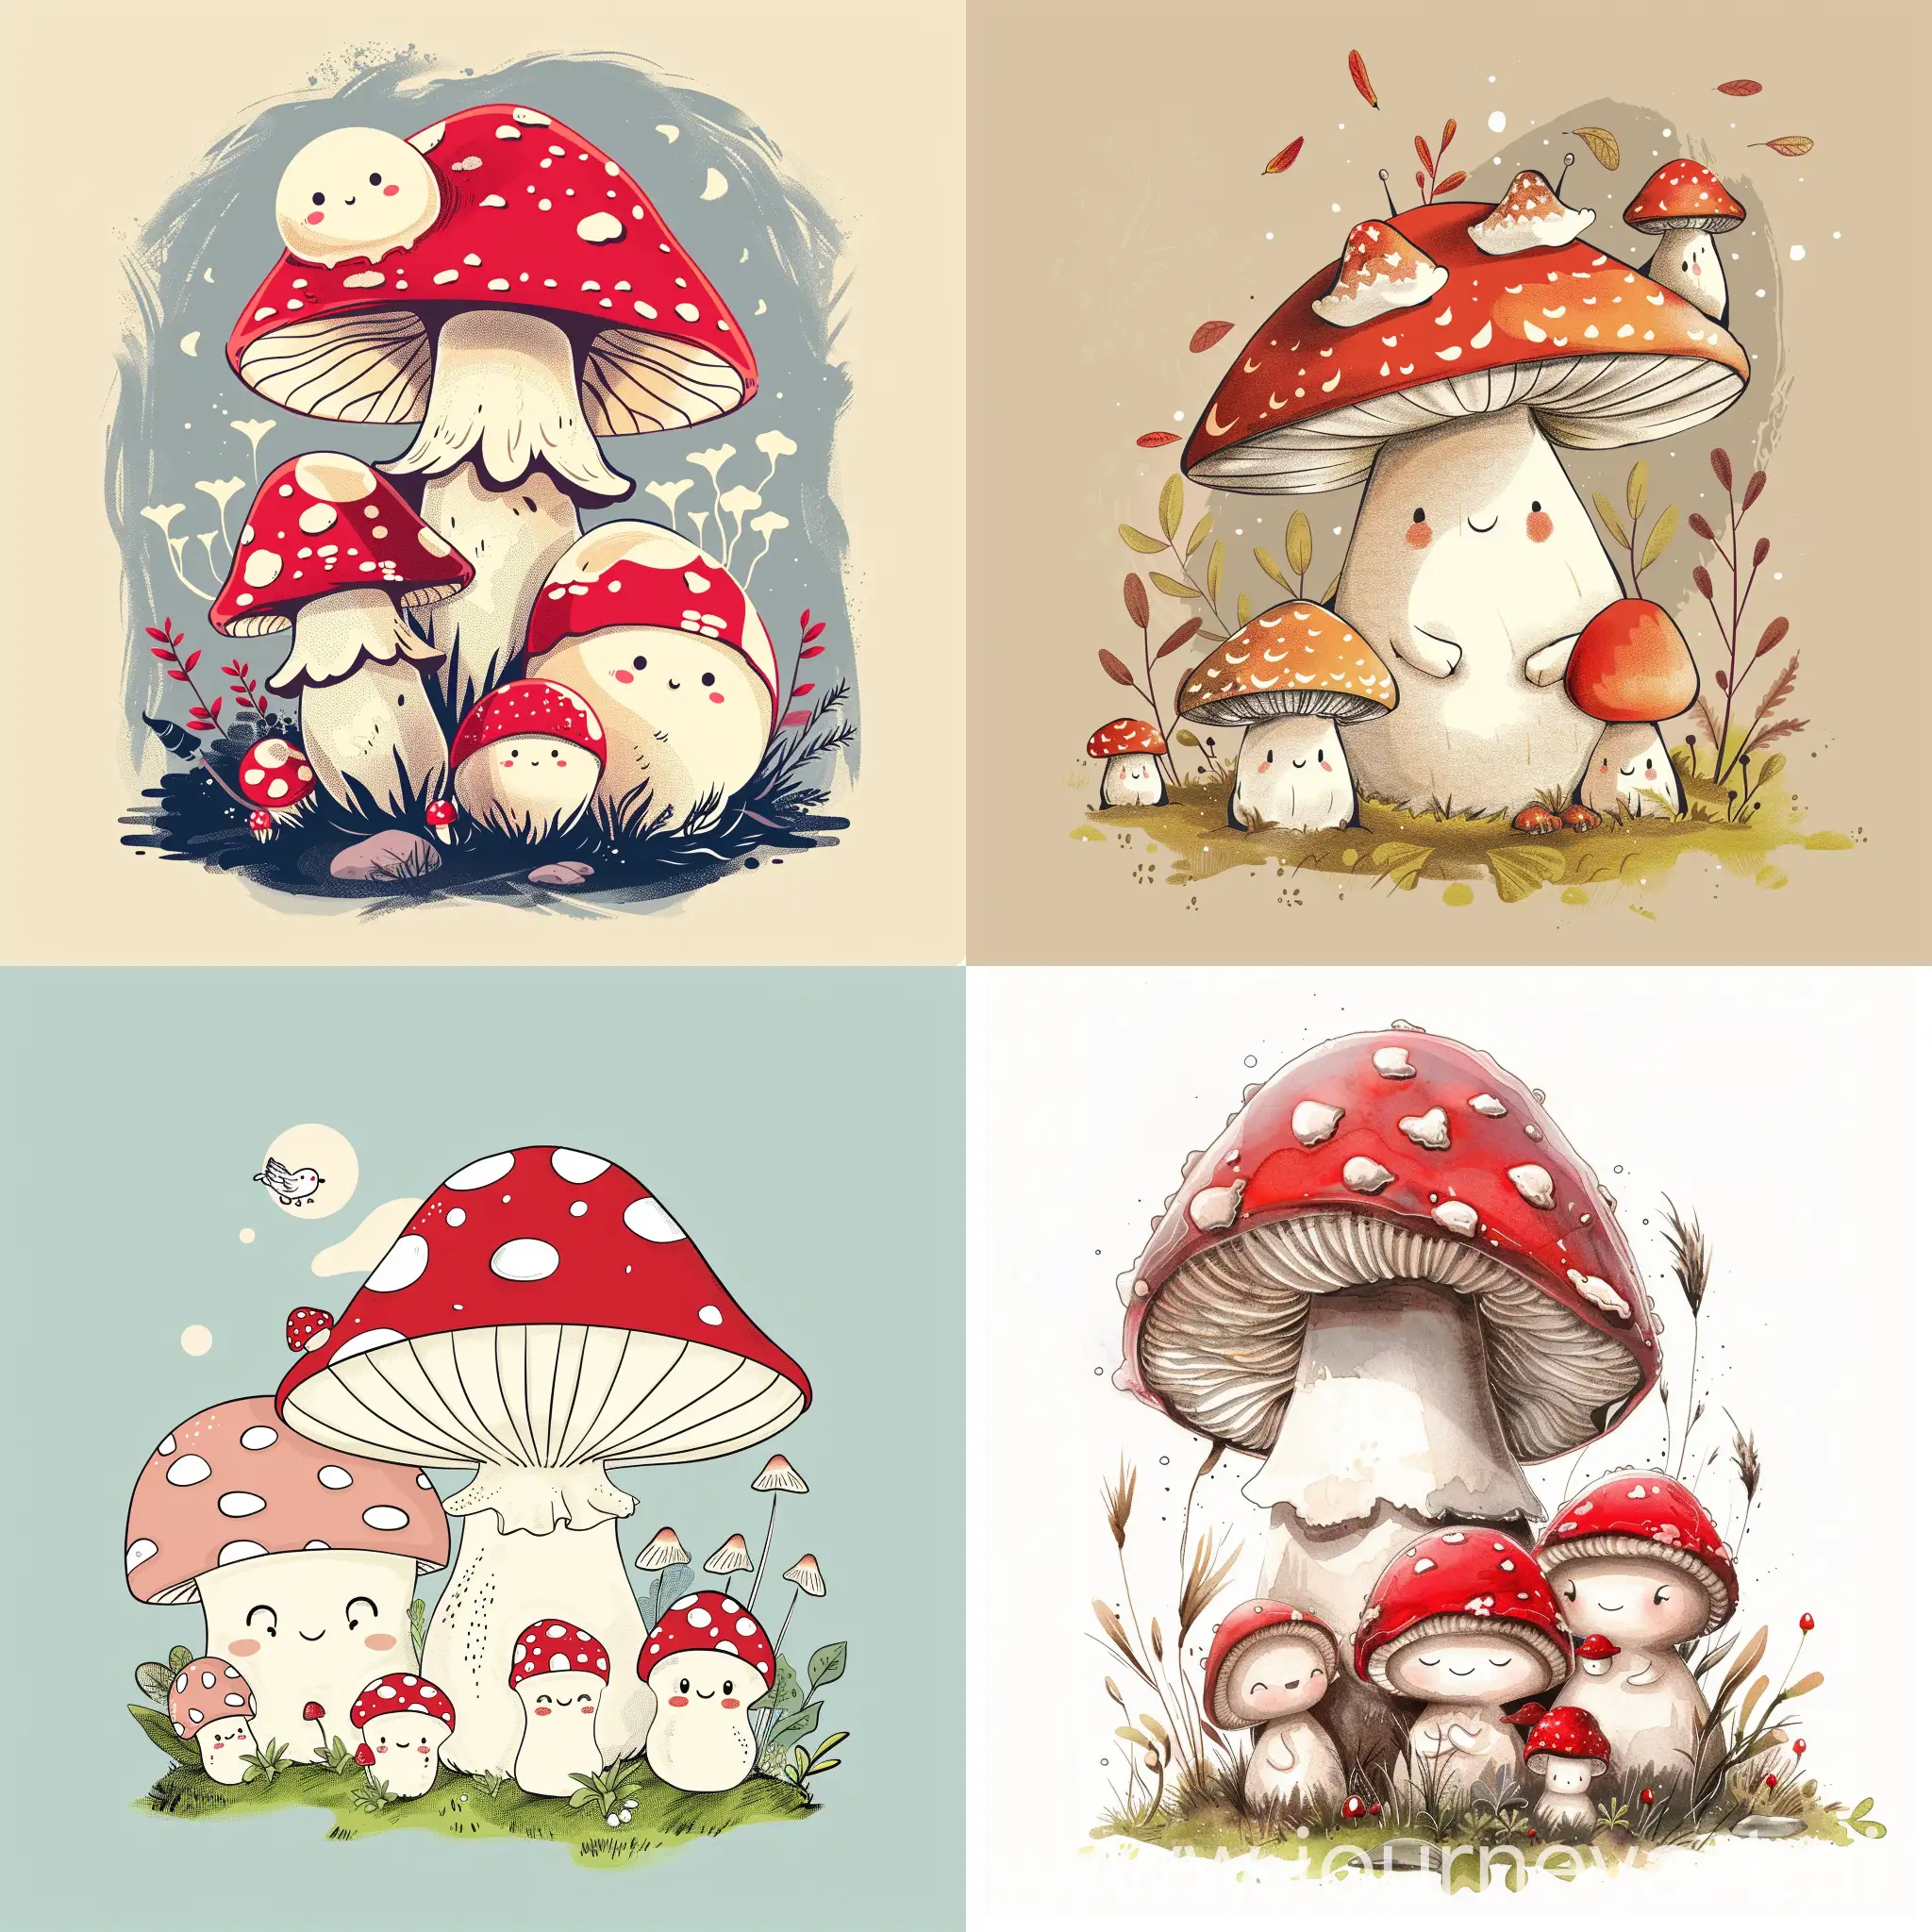 Tee-shirt designs

A cute mushroom family 

